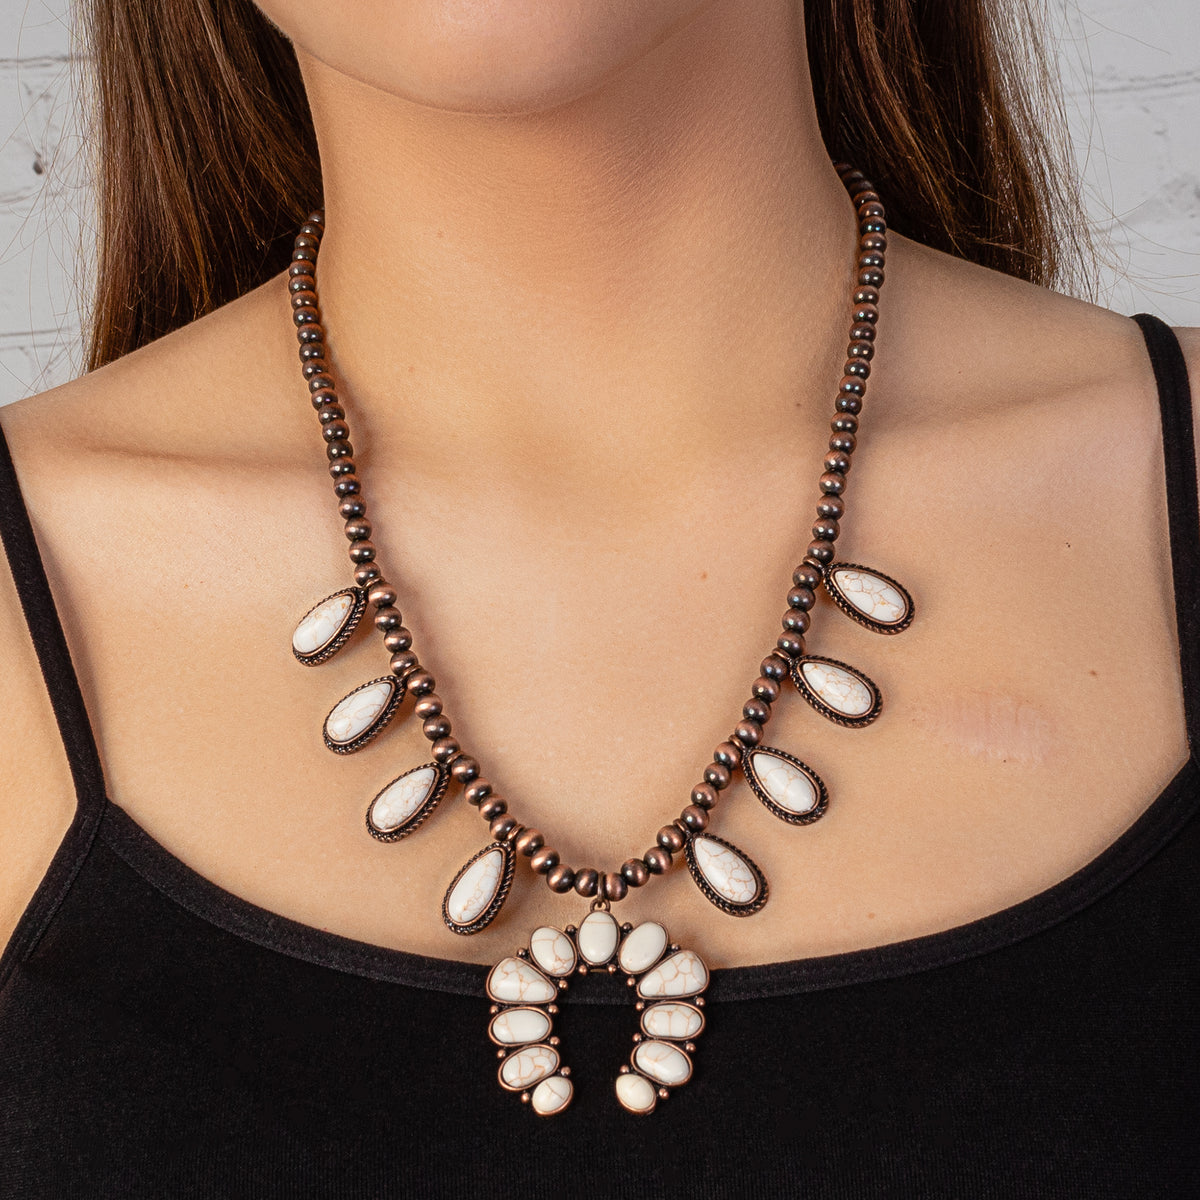 72842 - Squash Blossom Necklace - Ivory & Copper - Fashion Jewelry Wholesale